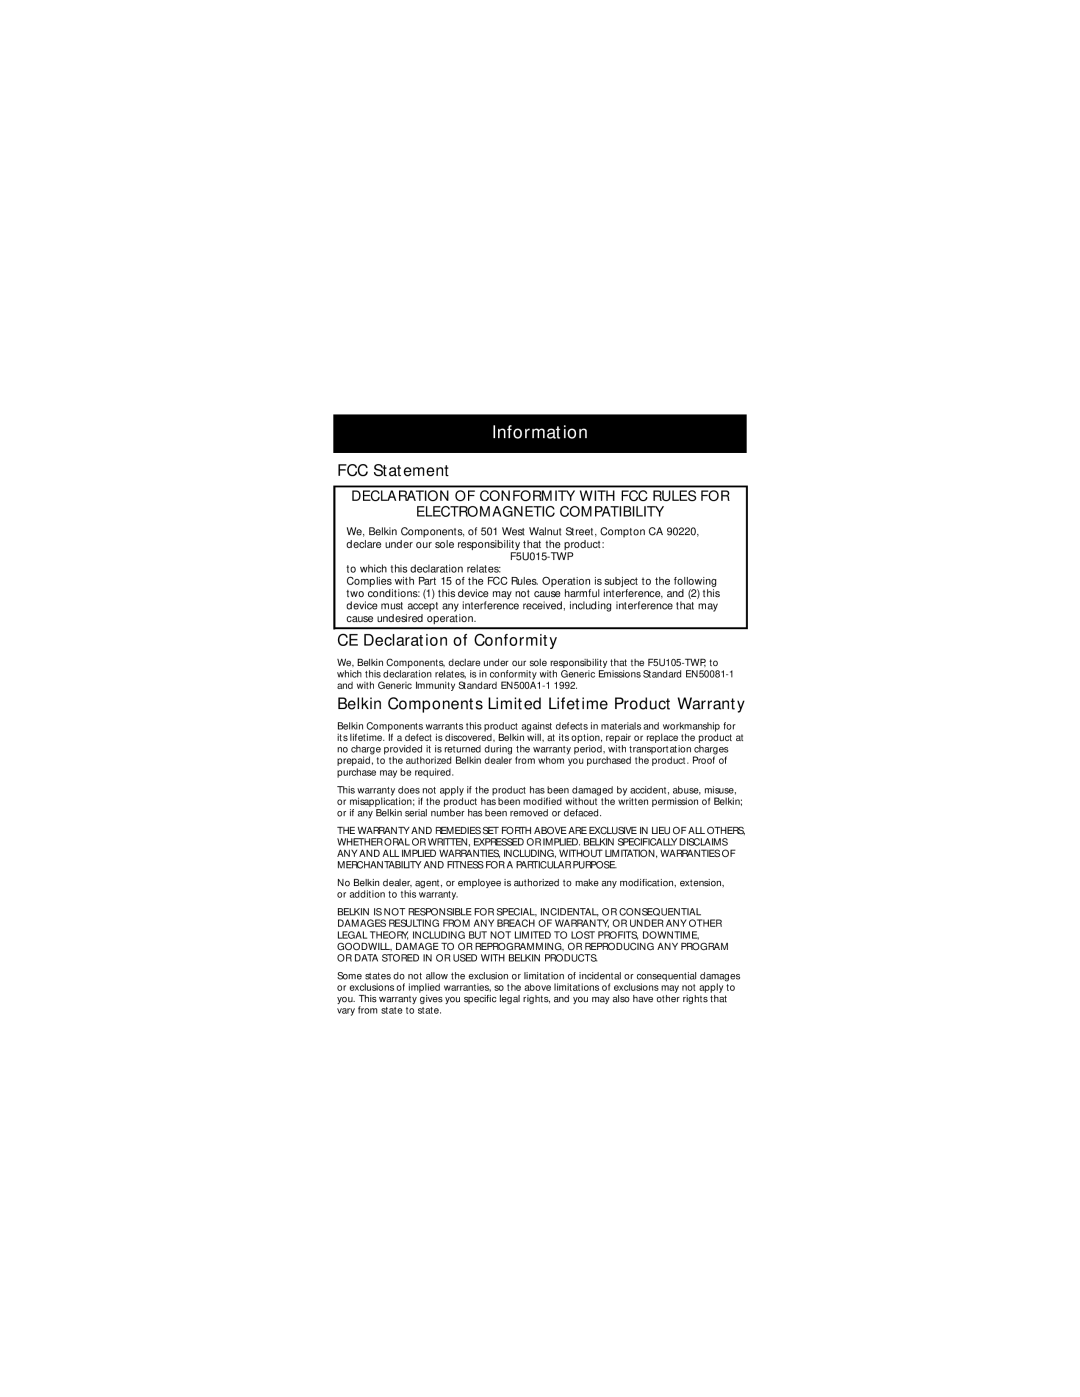 Belkin F5U015-TPW manual Information, FCC Statement, CE Declaration of Conformity 